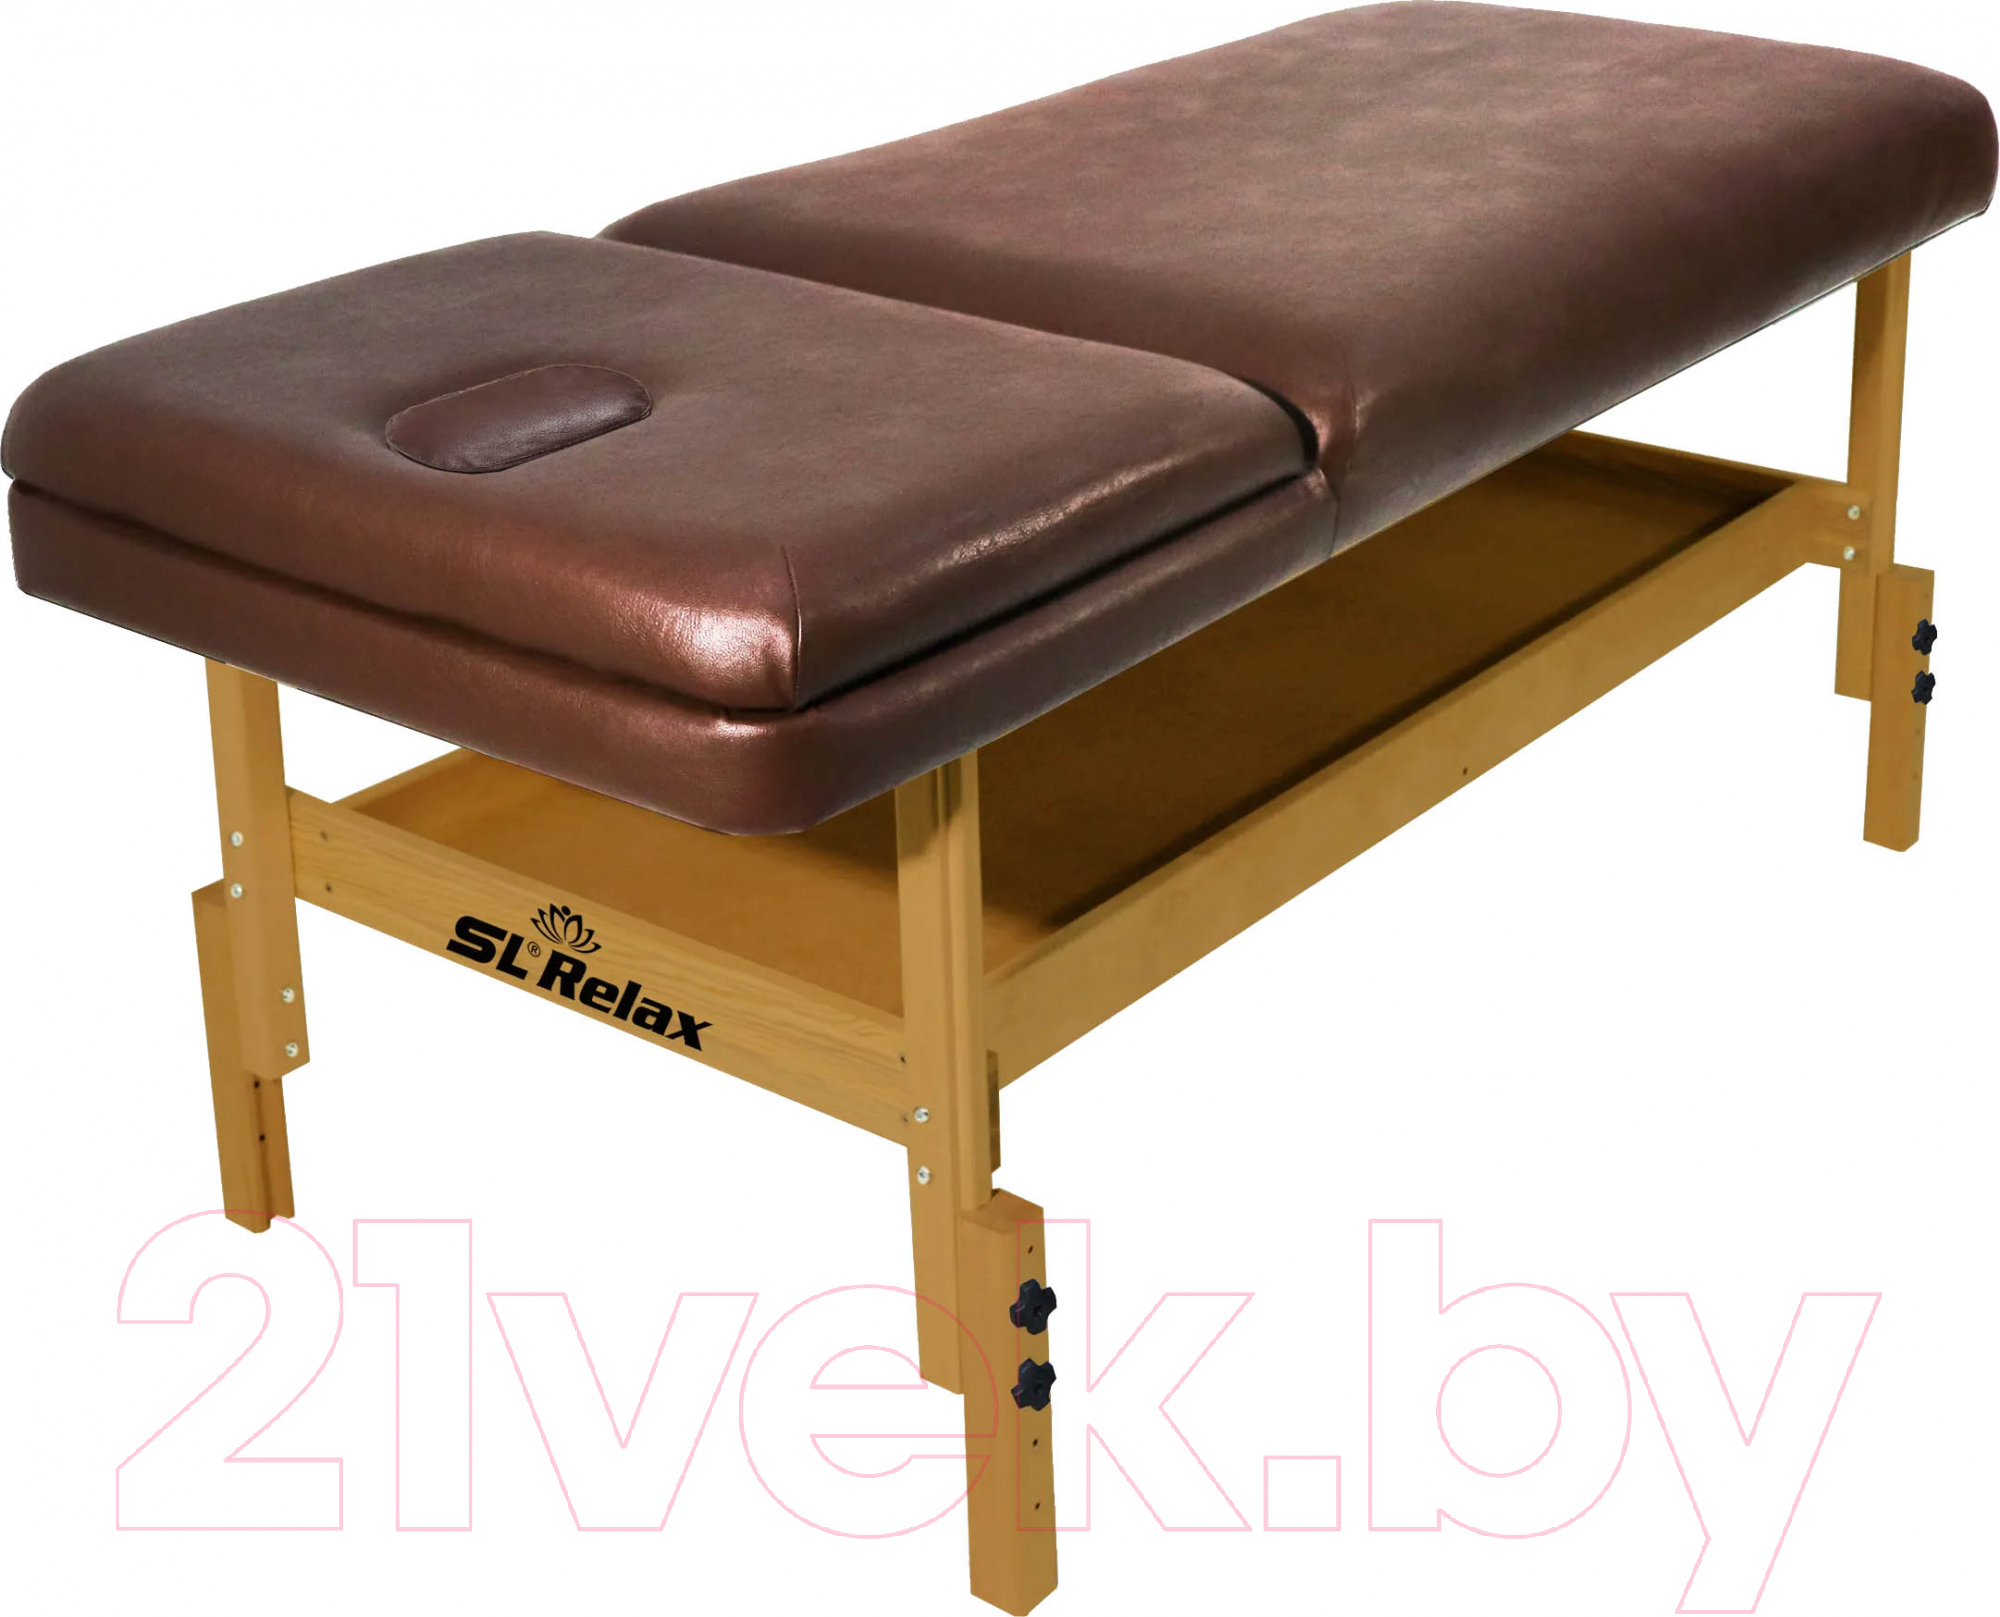 Массажный стол SL Relax Comfort №6 / SLR-10